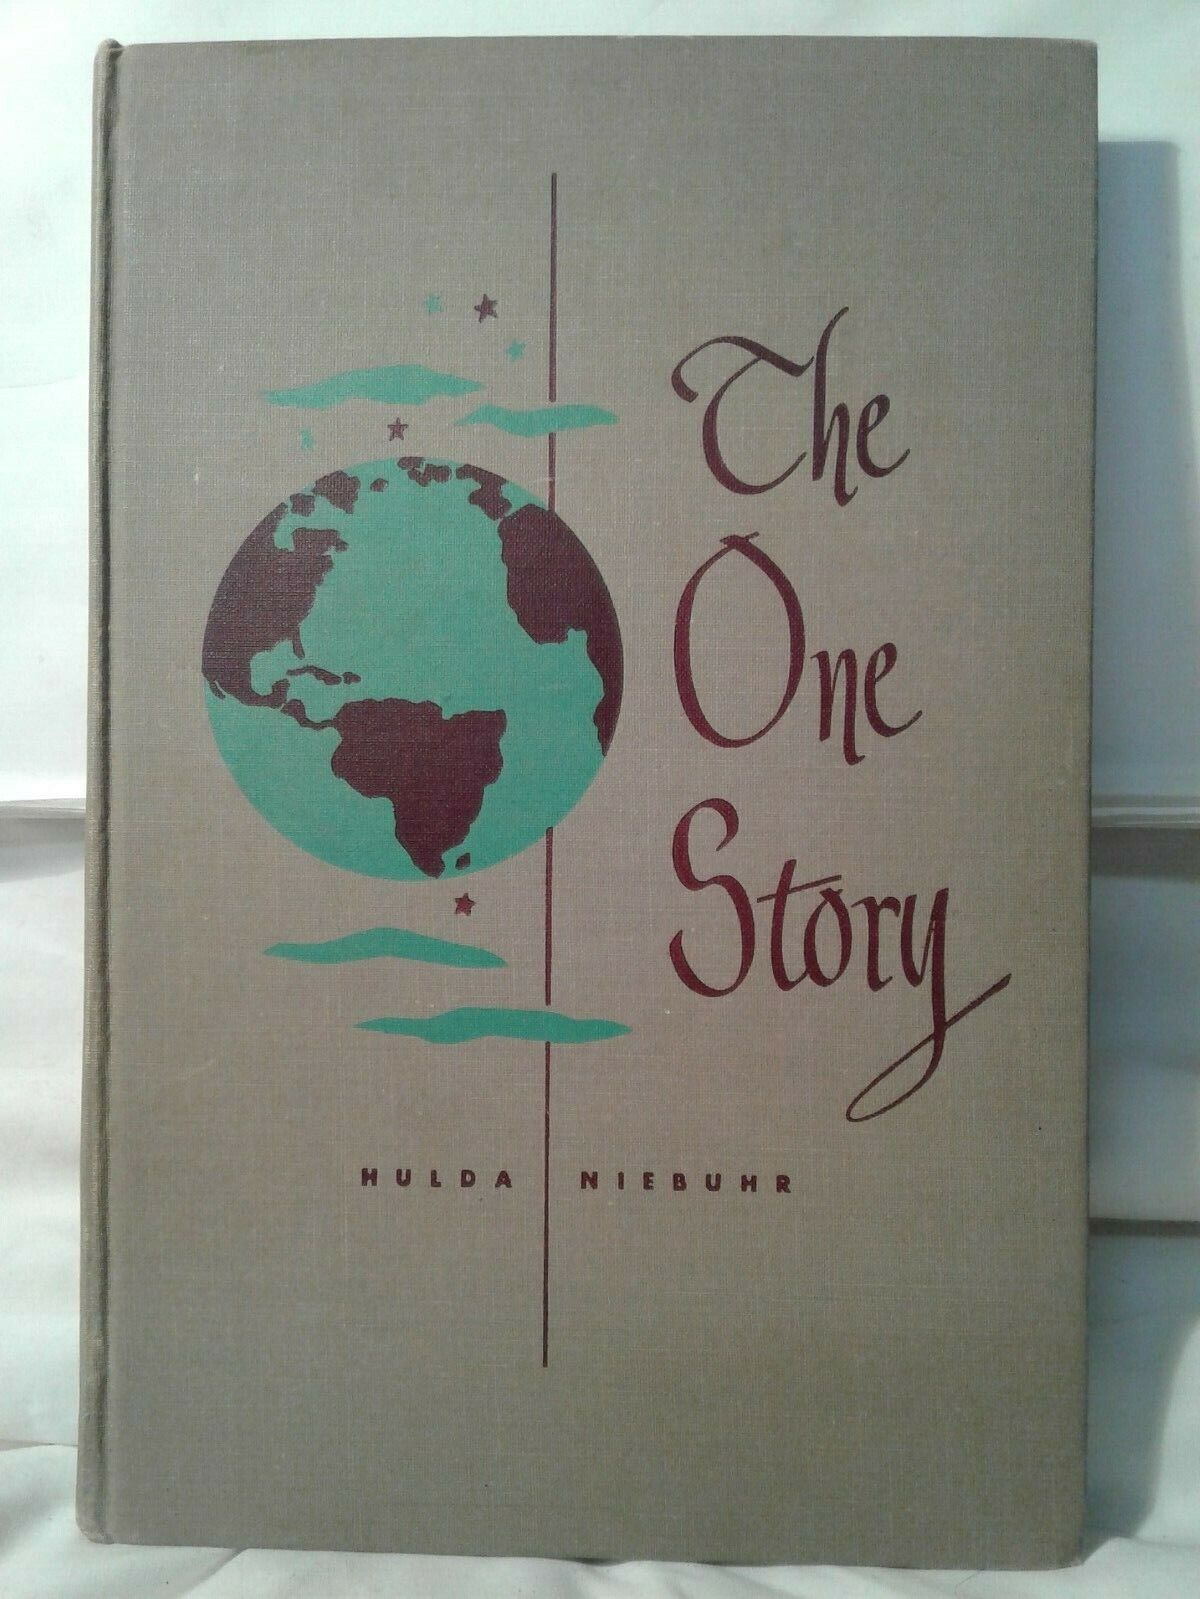 Vintage 1949 hardback book THE ONE STORY Hulda Niebuhr religion spiritual USA